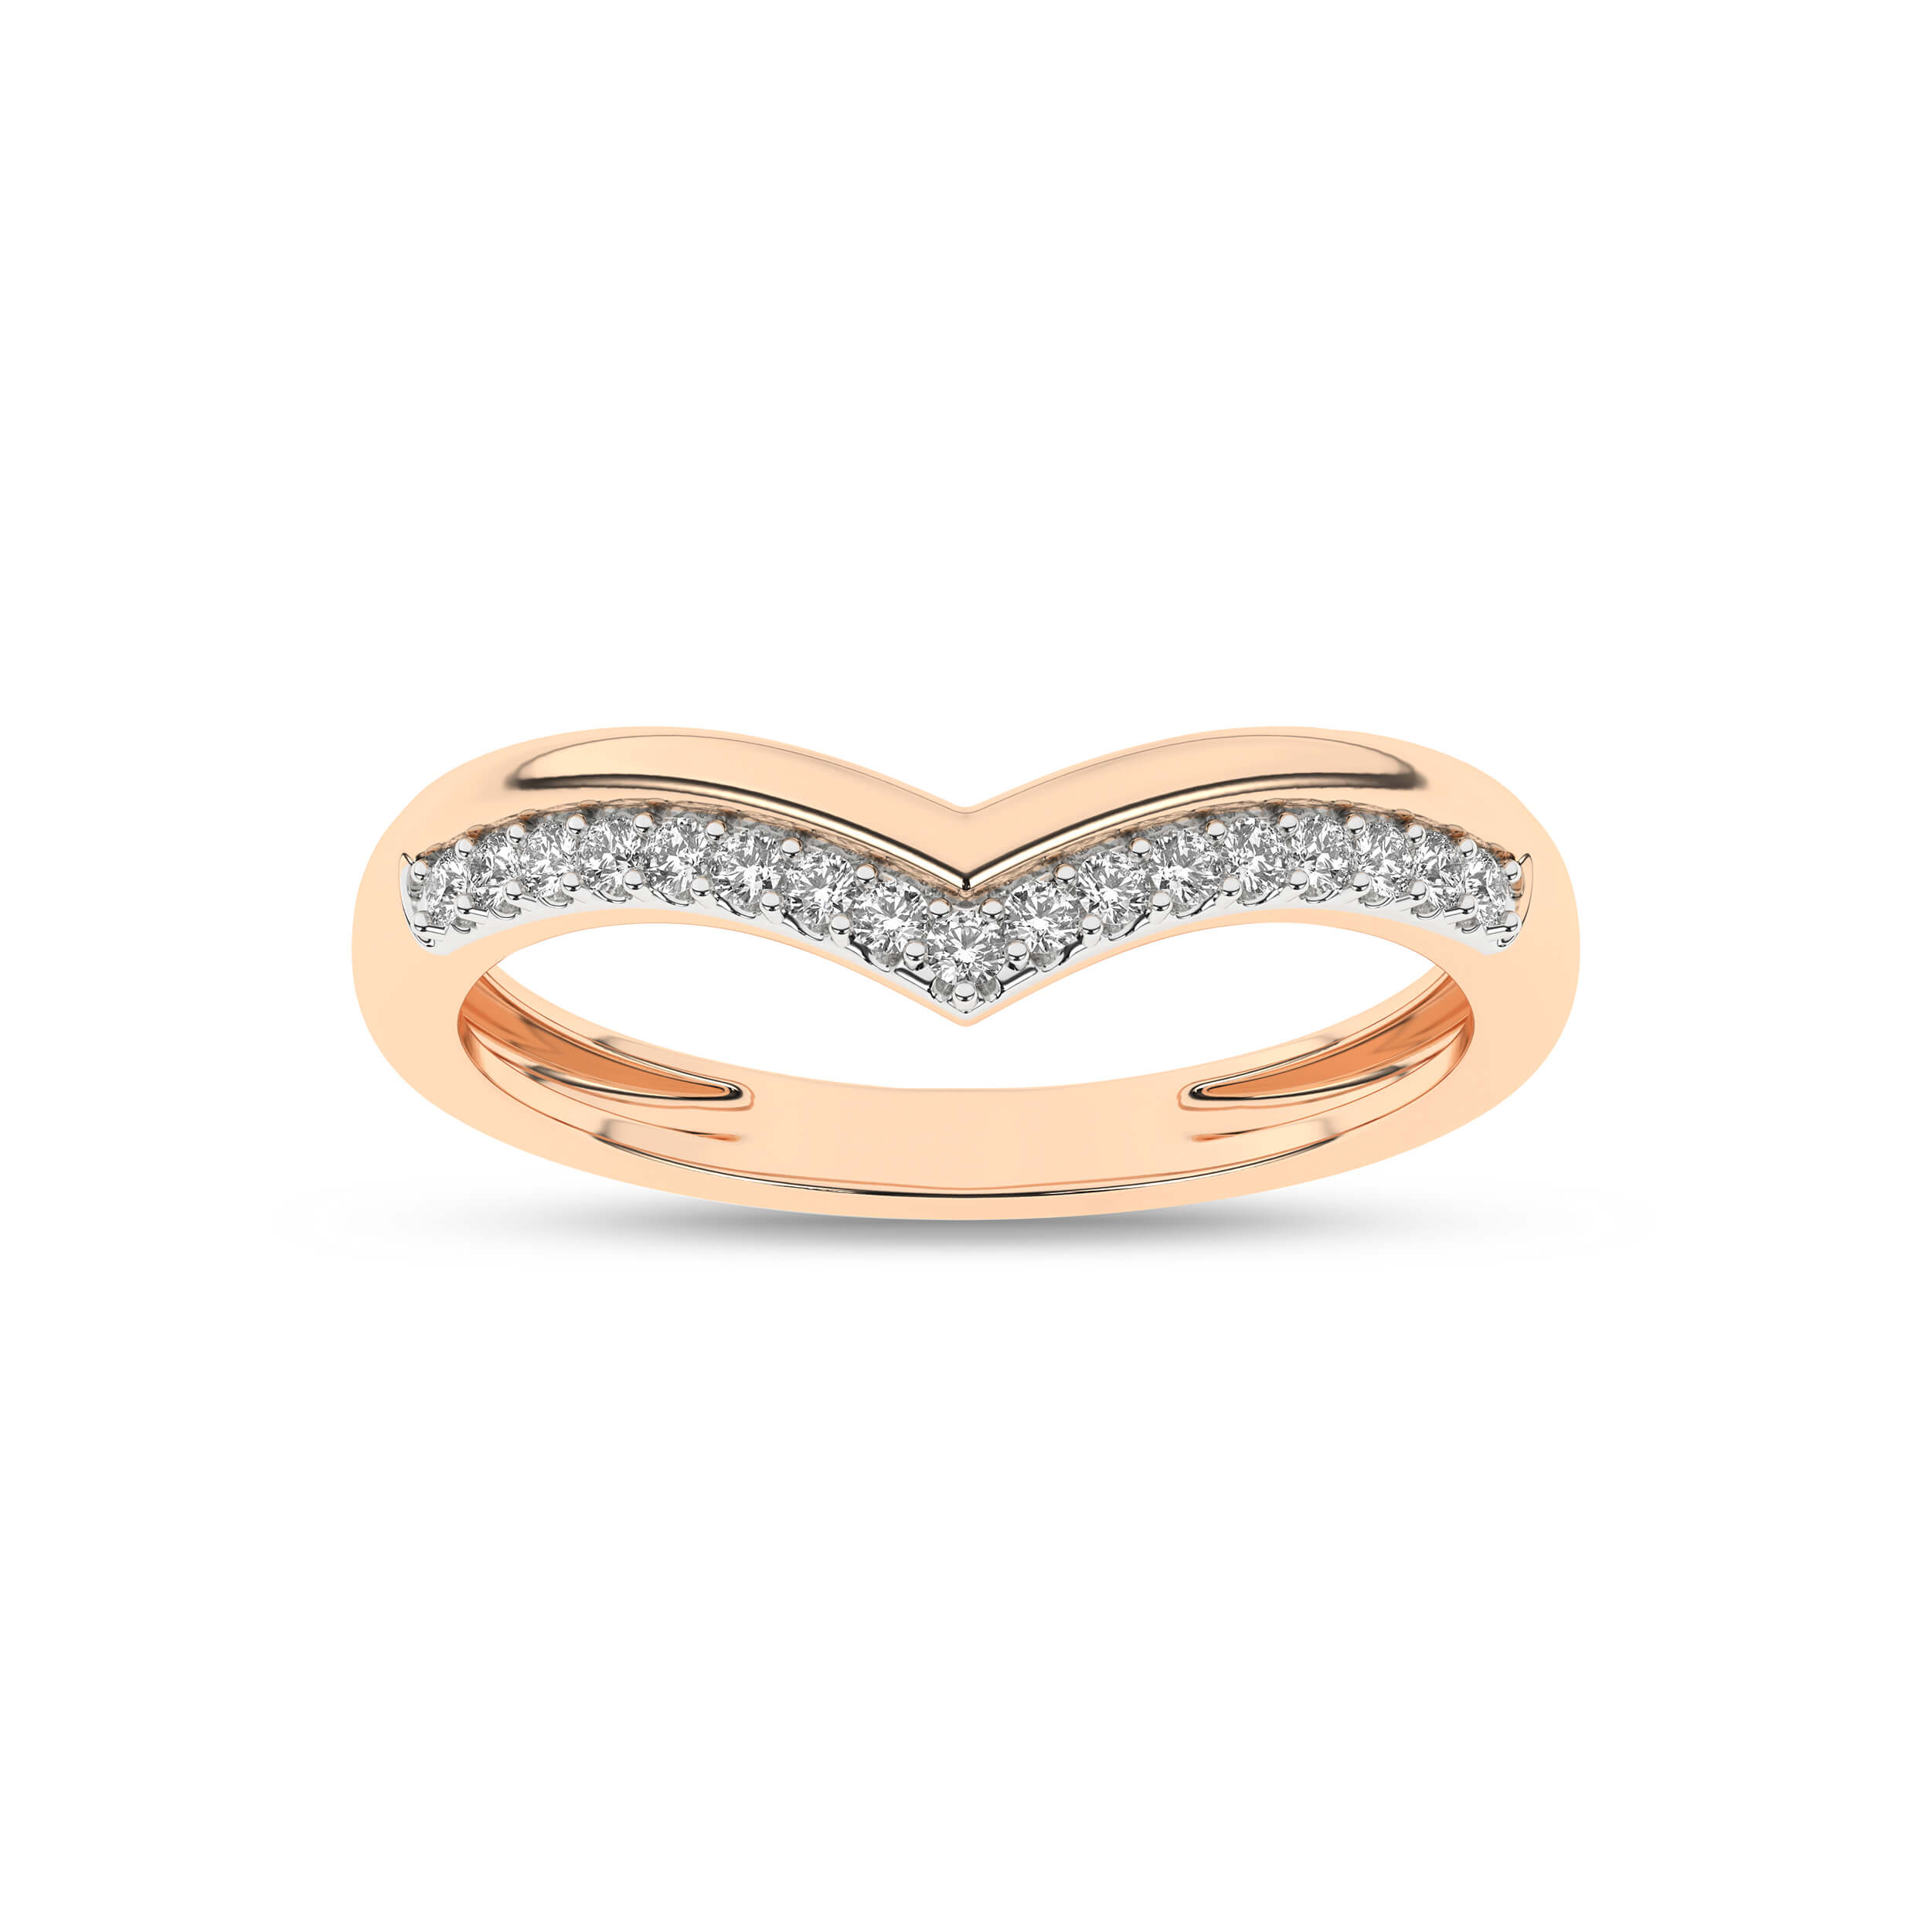 Inel din Aur Roz 14K cu Diamante, articol RA7379, previzualizare foto 1